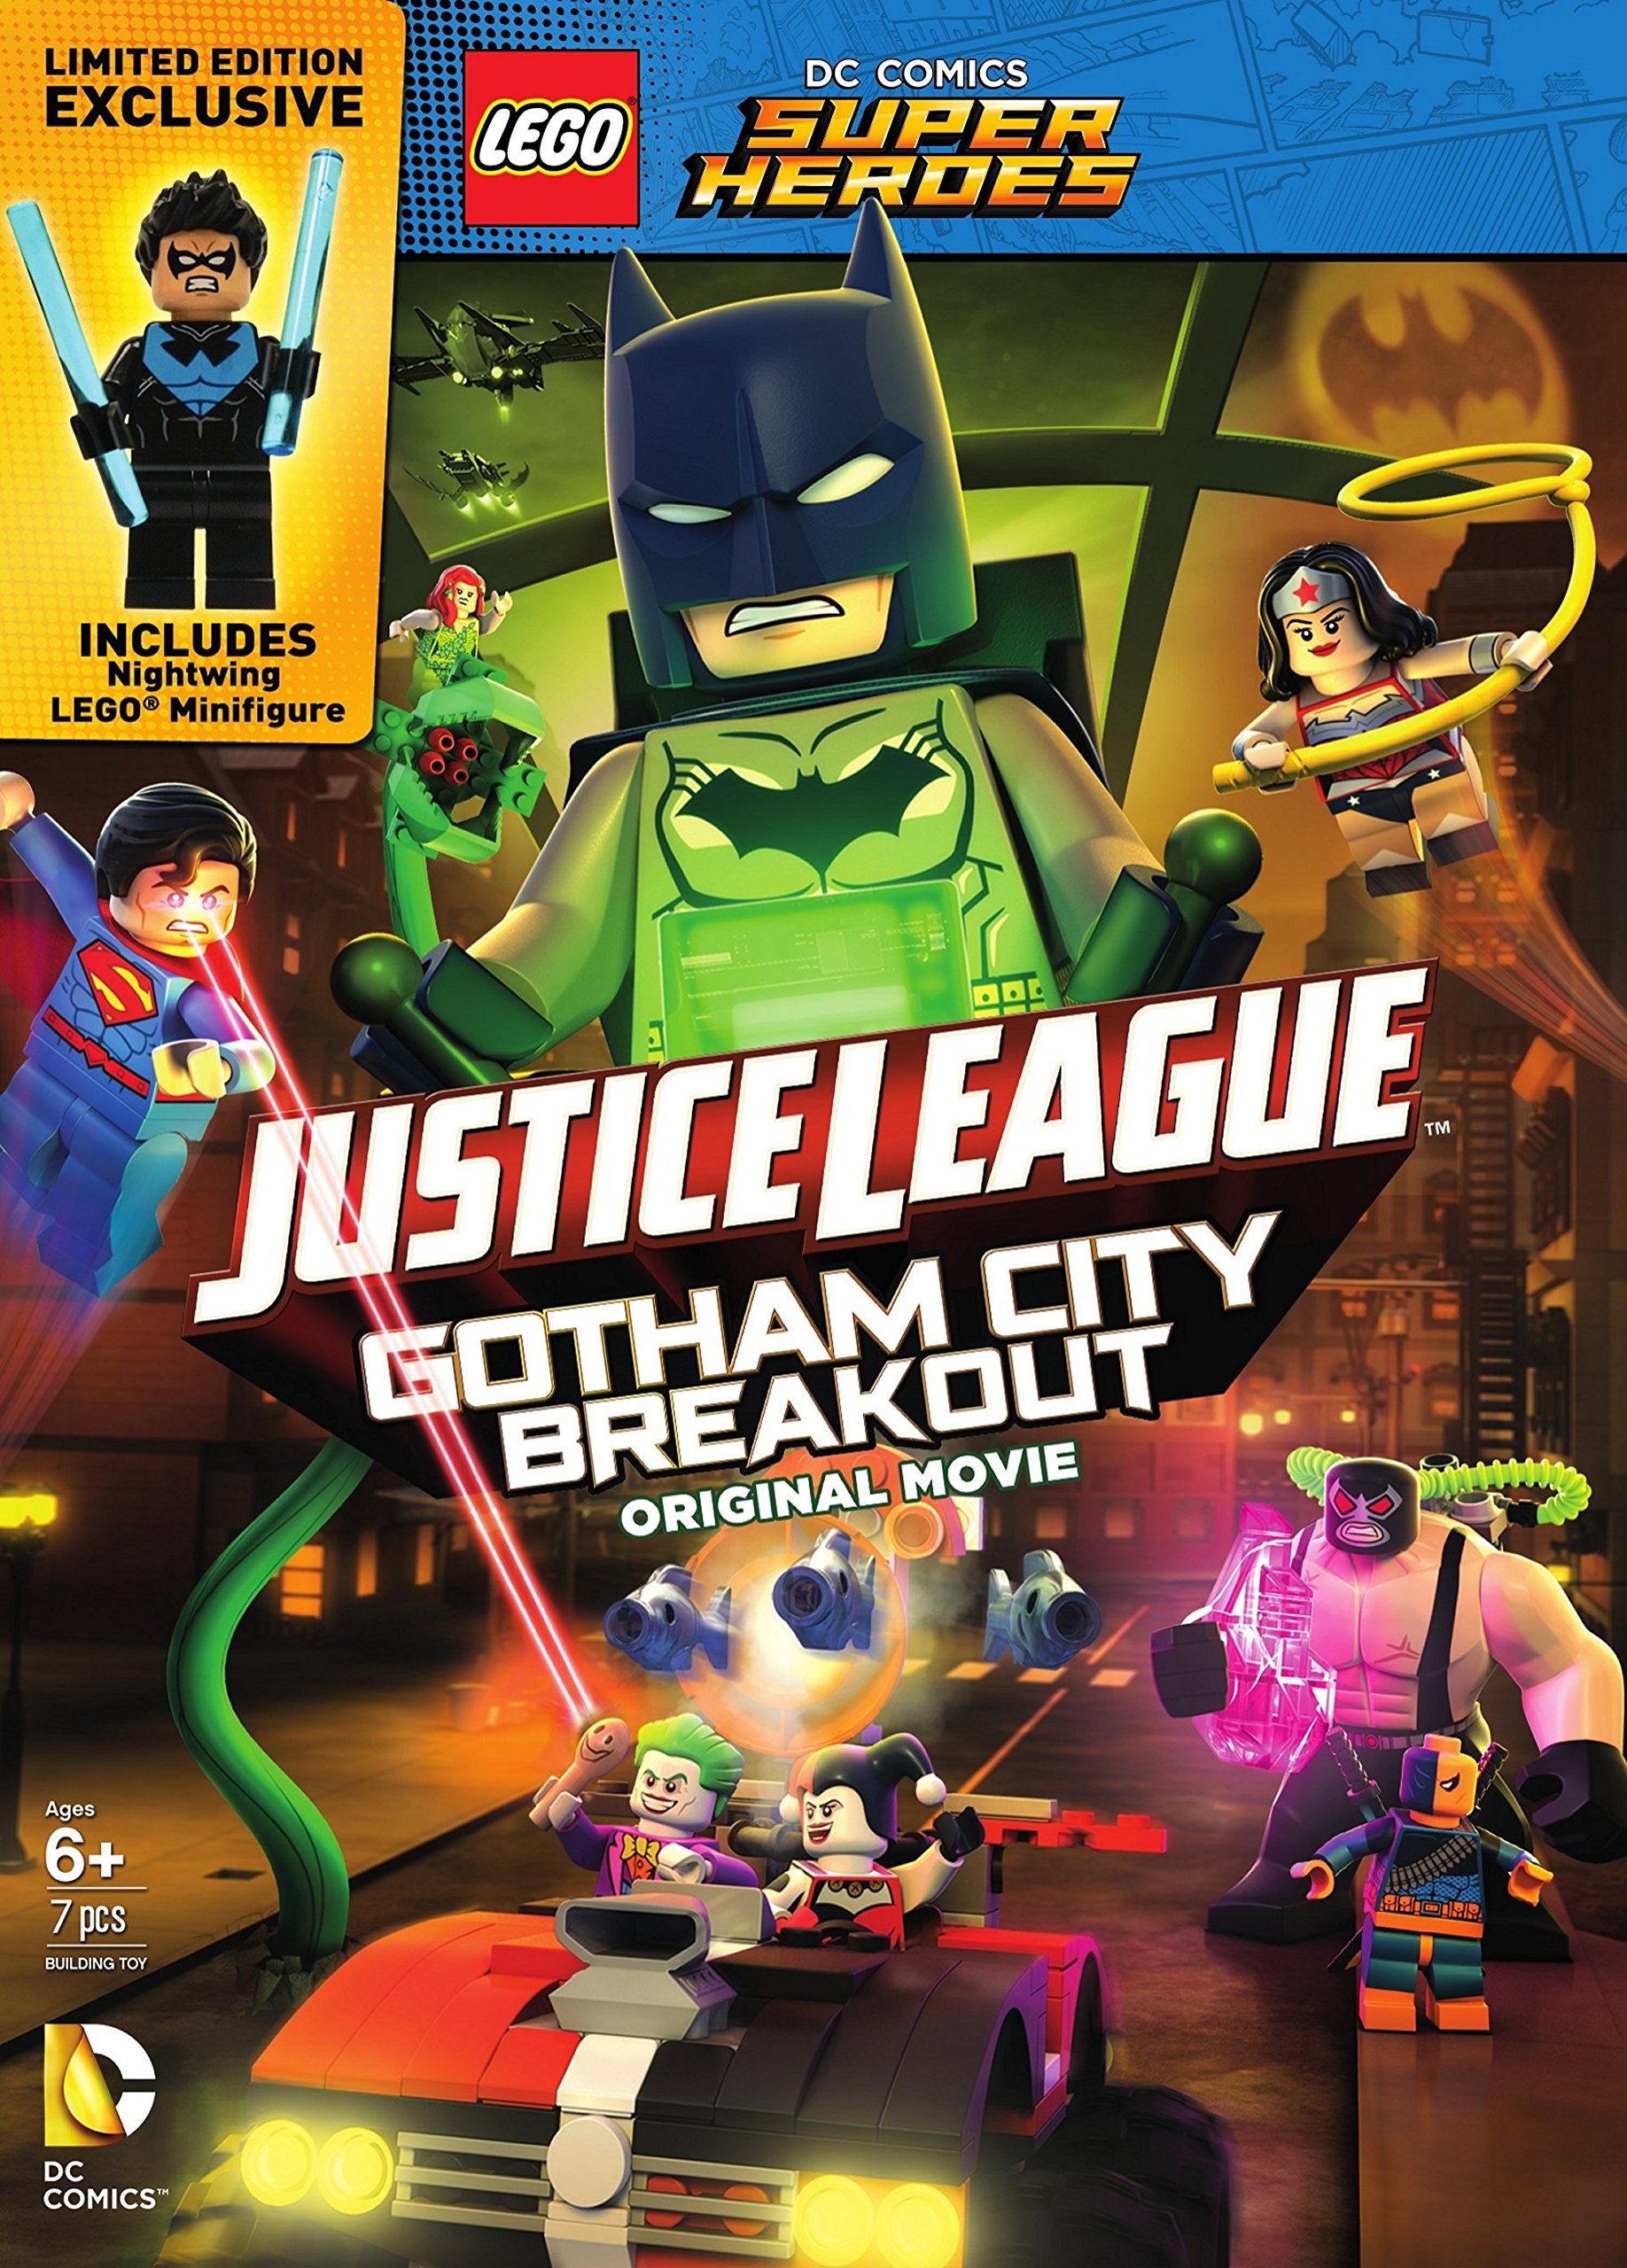 LEGO DC Comic Super Heroes: Justice League - Gefängnisausbruch in Gotham City (Limitiere Edition, inkl. Nightwing LEGO Minifigur) [DVD] (Neu differenzbesteuert)